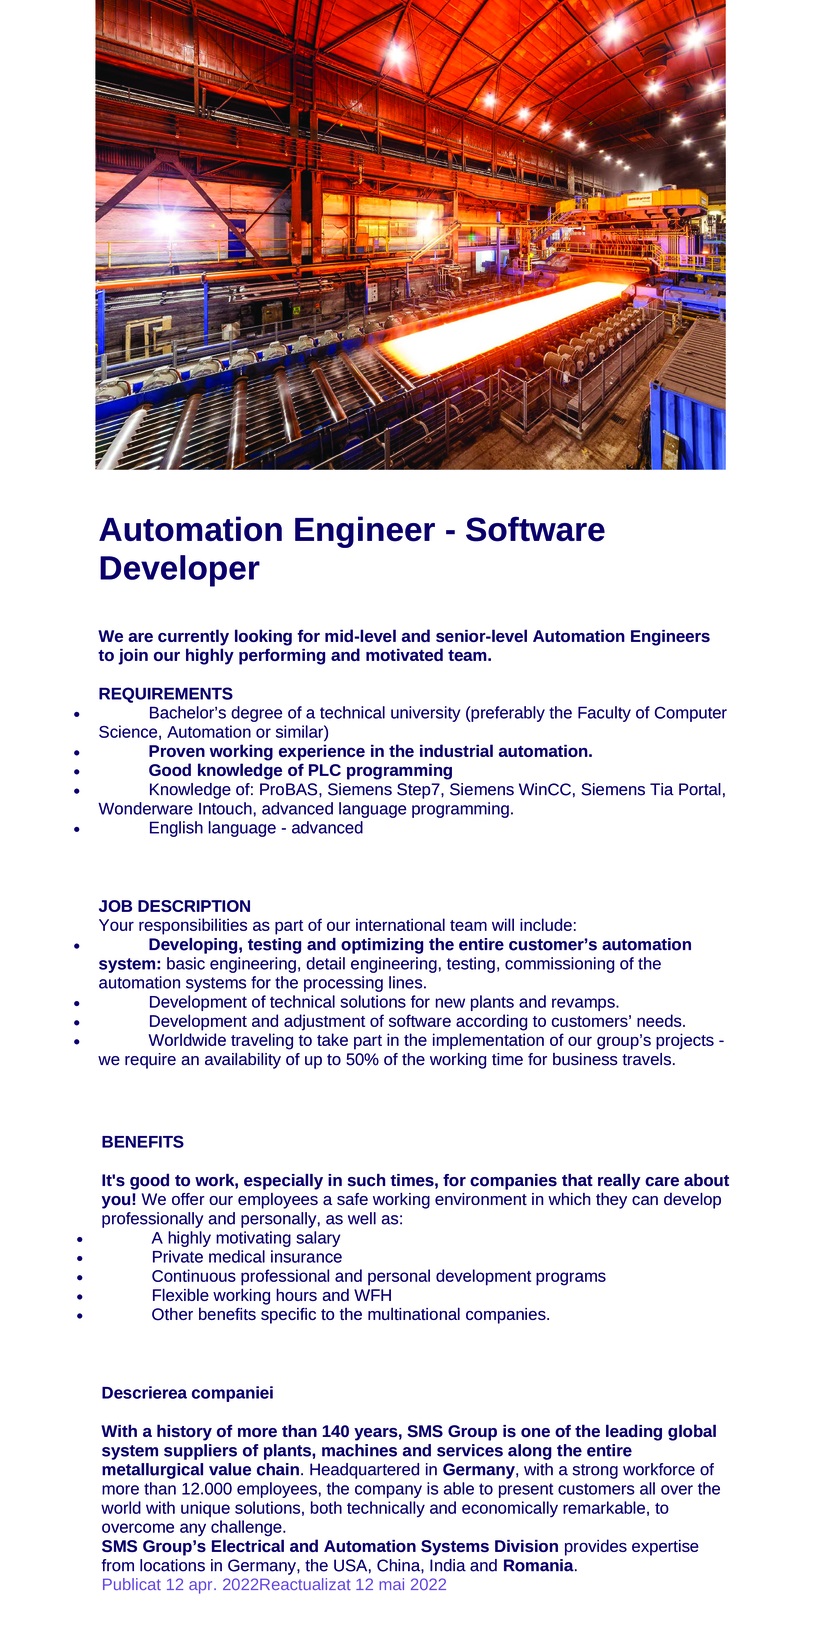 Automation Engineer - Software Developer